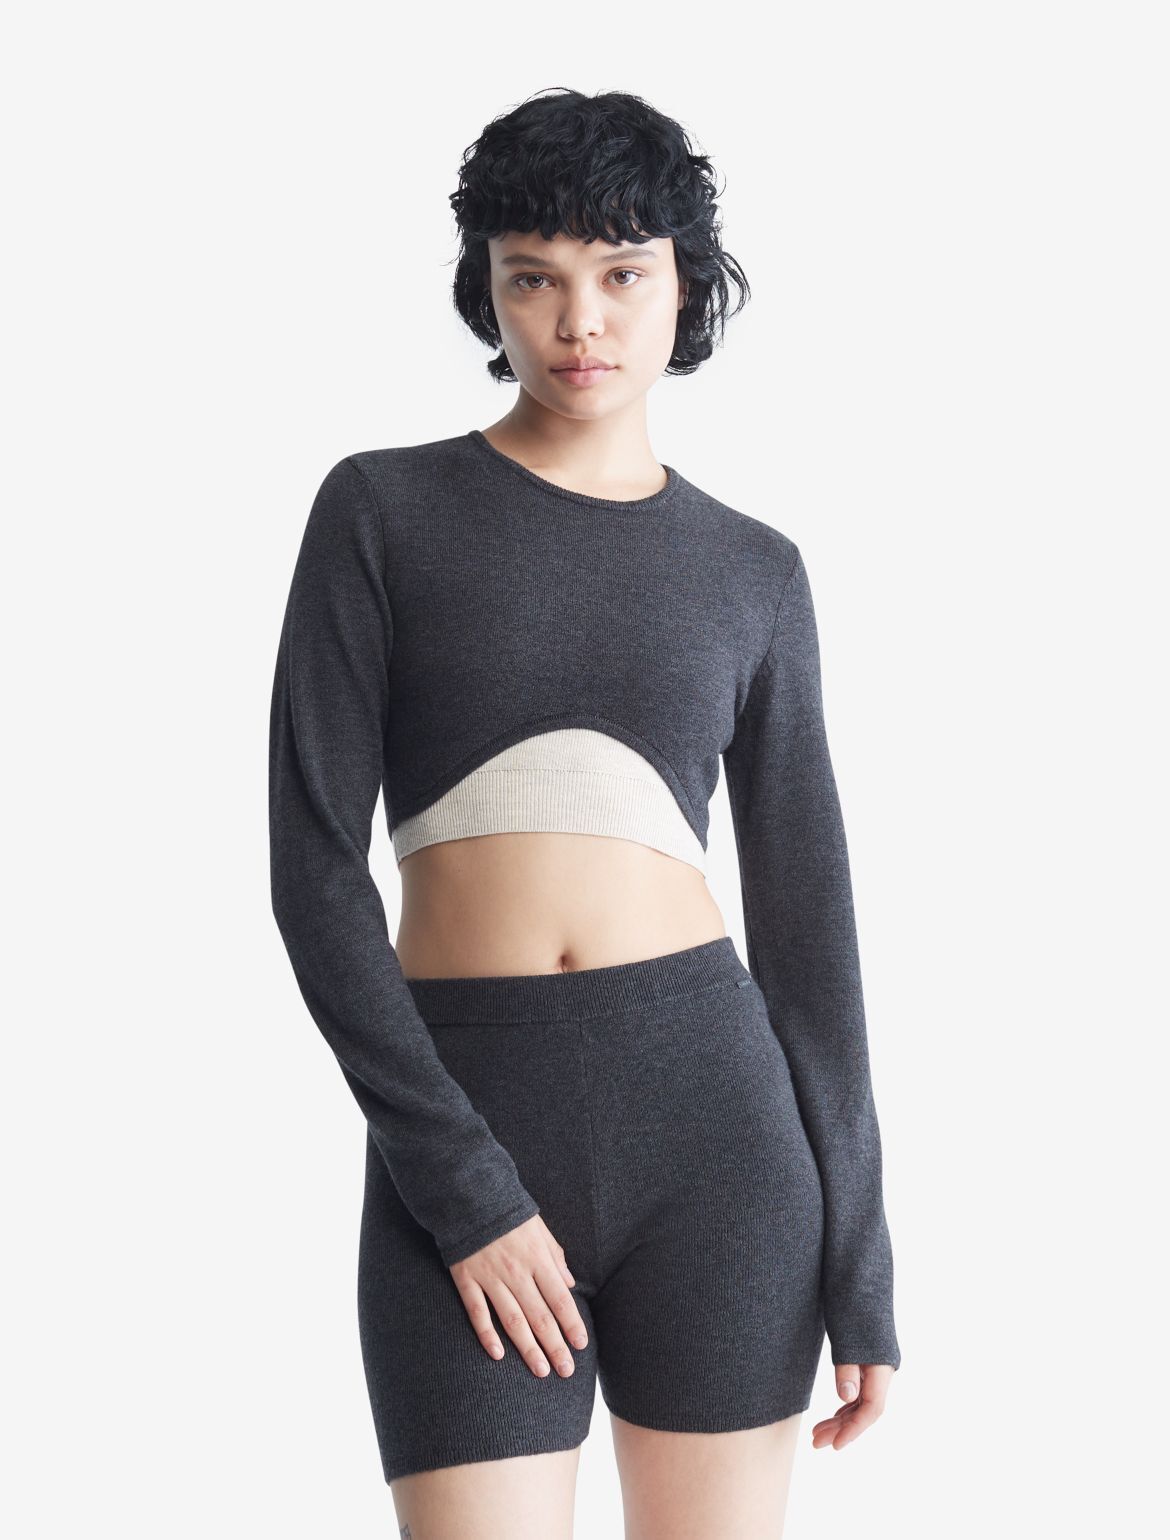 Calvin Klein Women's Sweater Lounge Crewneck Long Sleeve Top - Grey - L